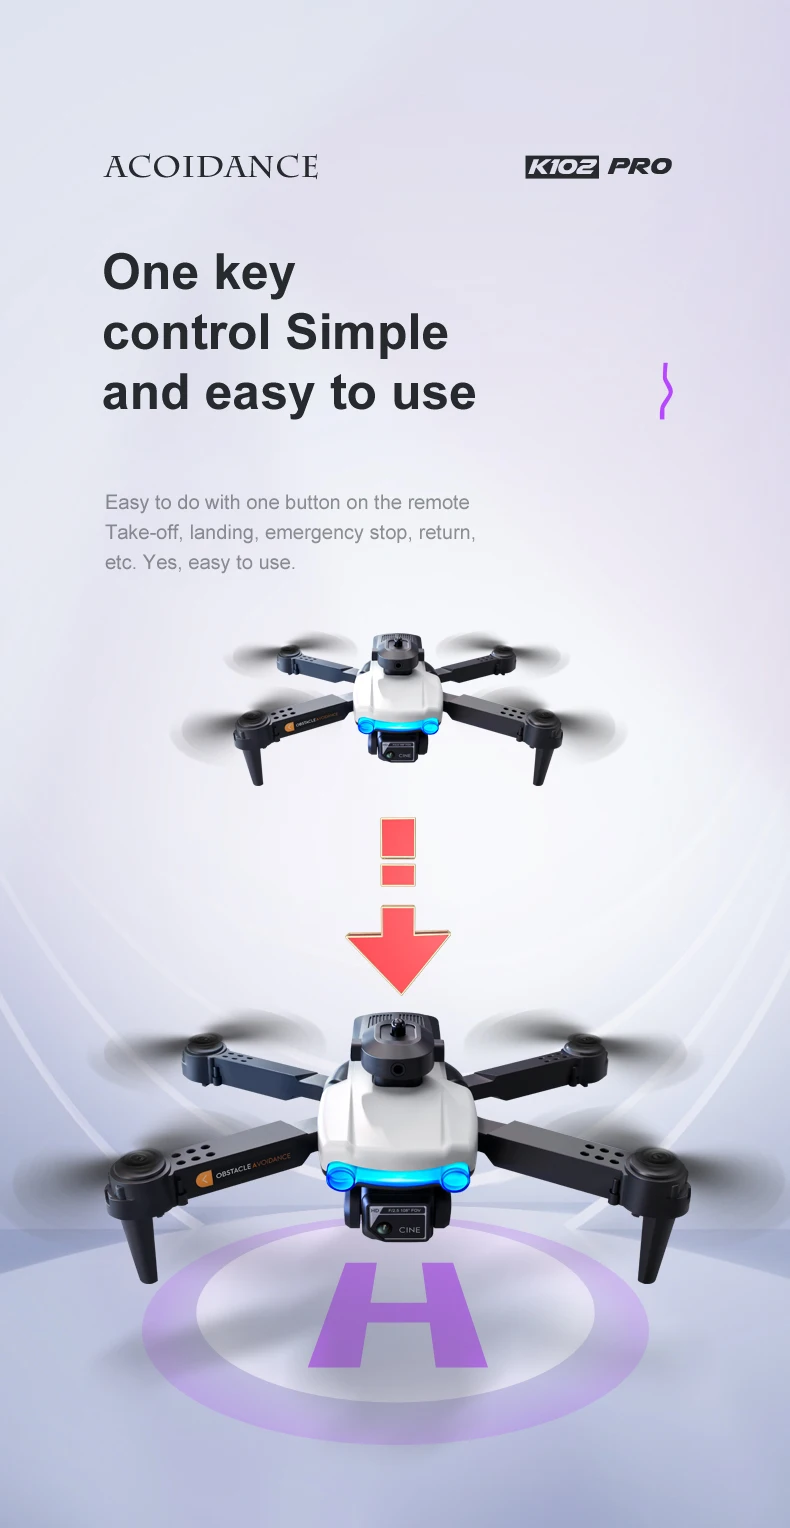 K102 Pro Drone, acoidance k1oz pro one key